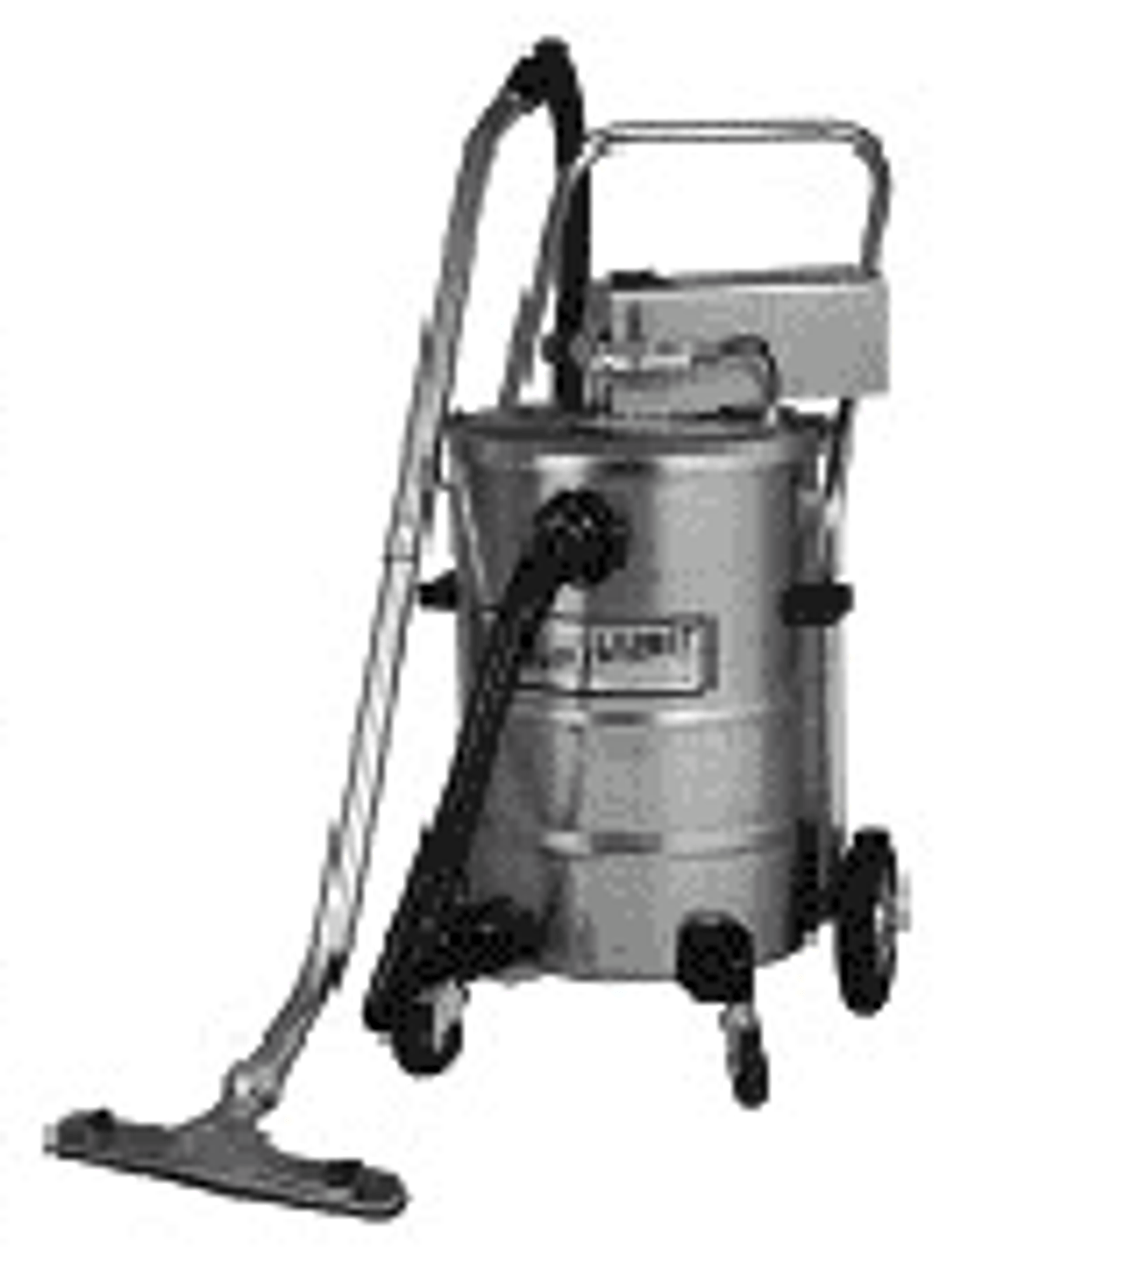 IMPA 590701 Vacuumcleaner industrial pneumatic - 60 ltr Taurus TVC60A - cart